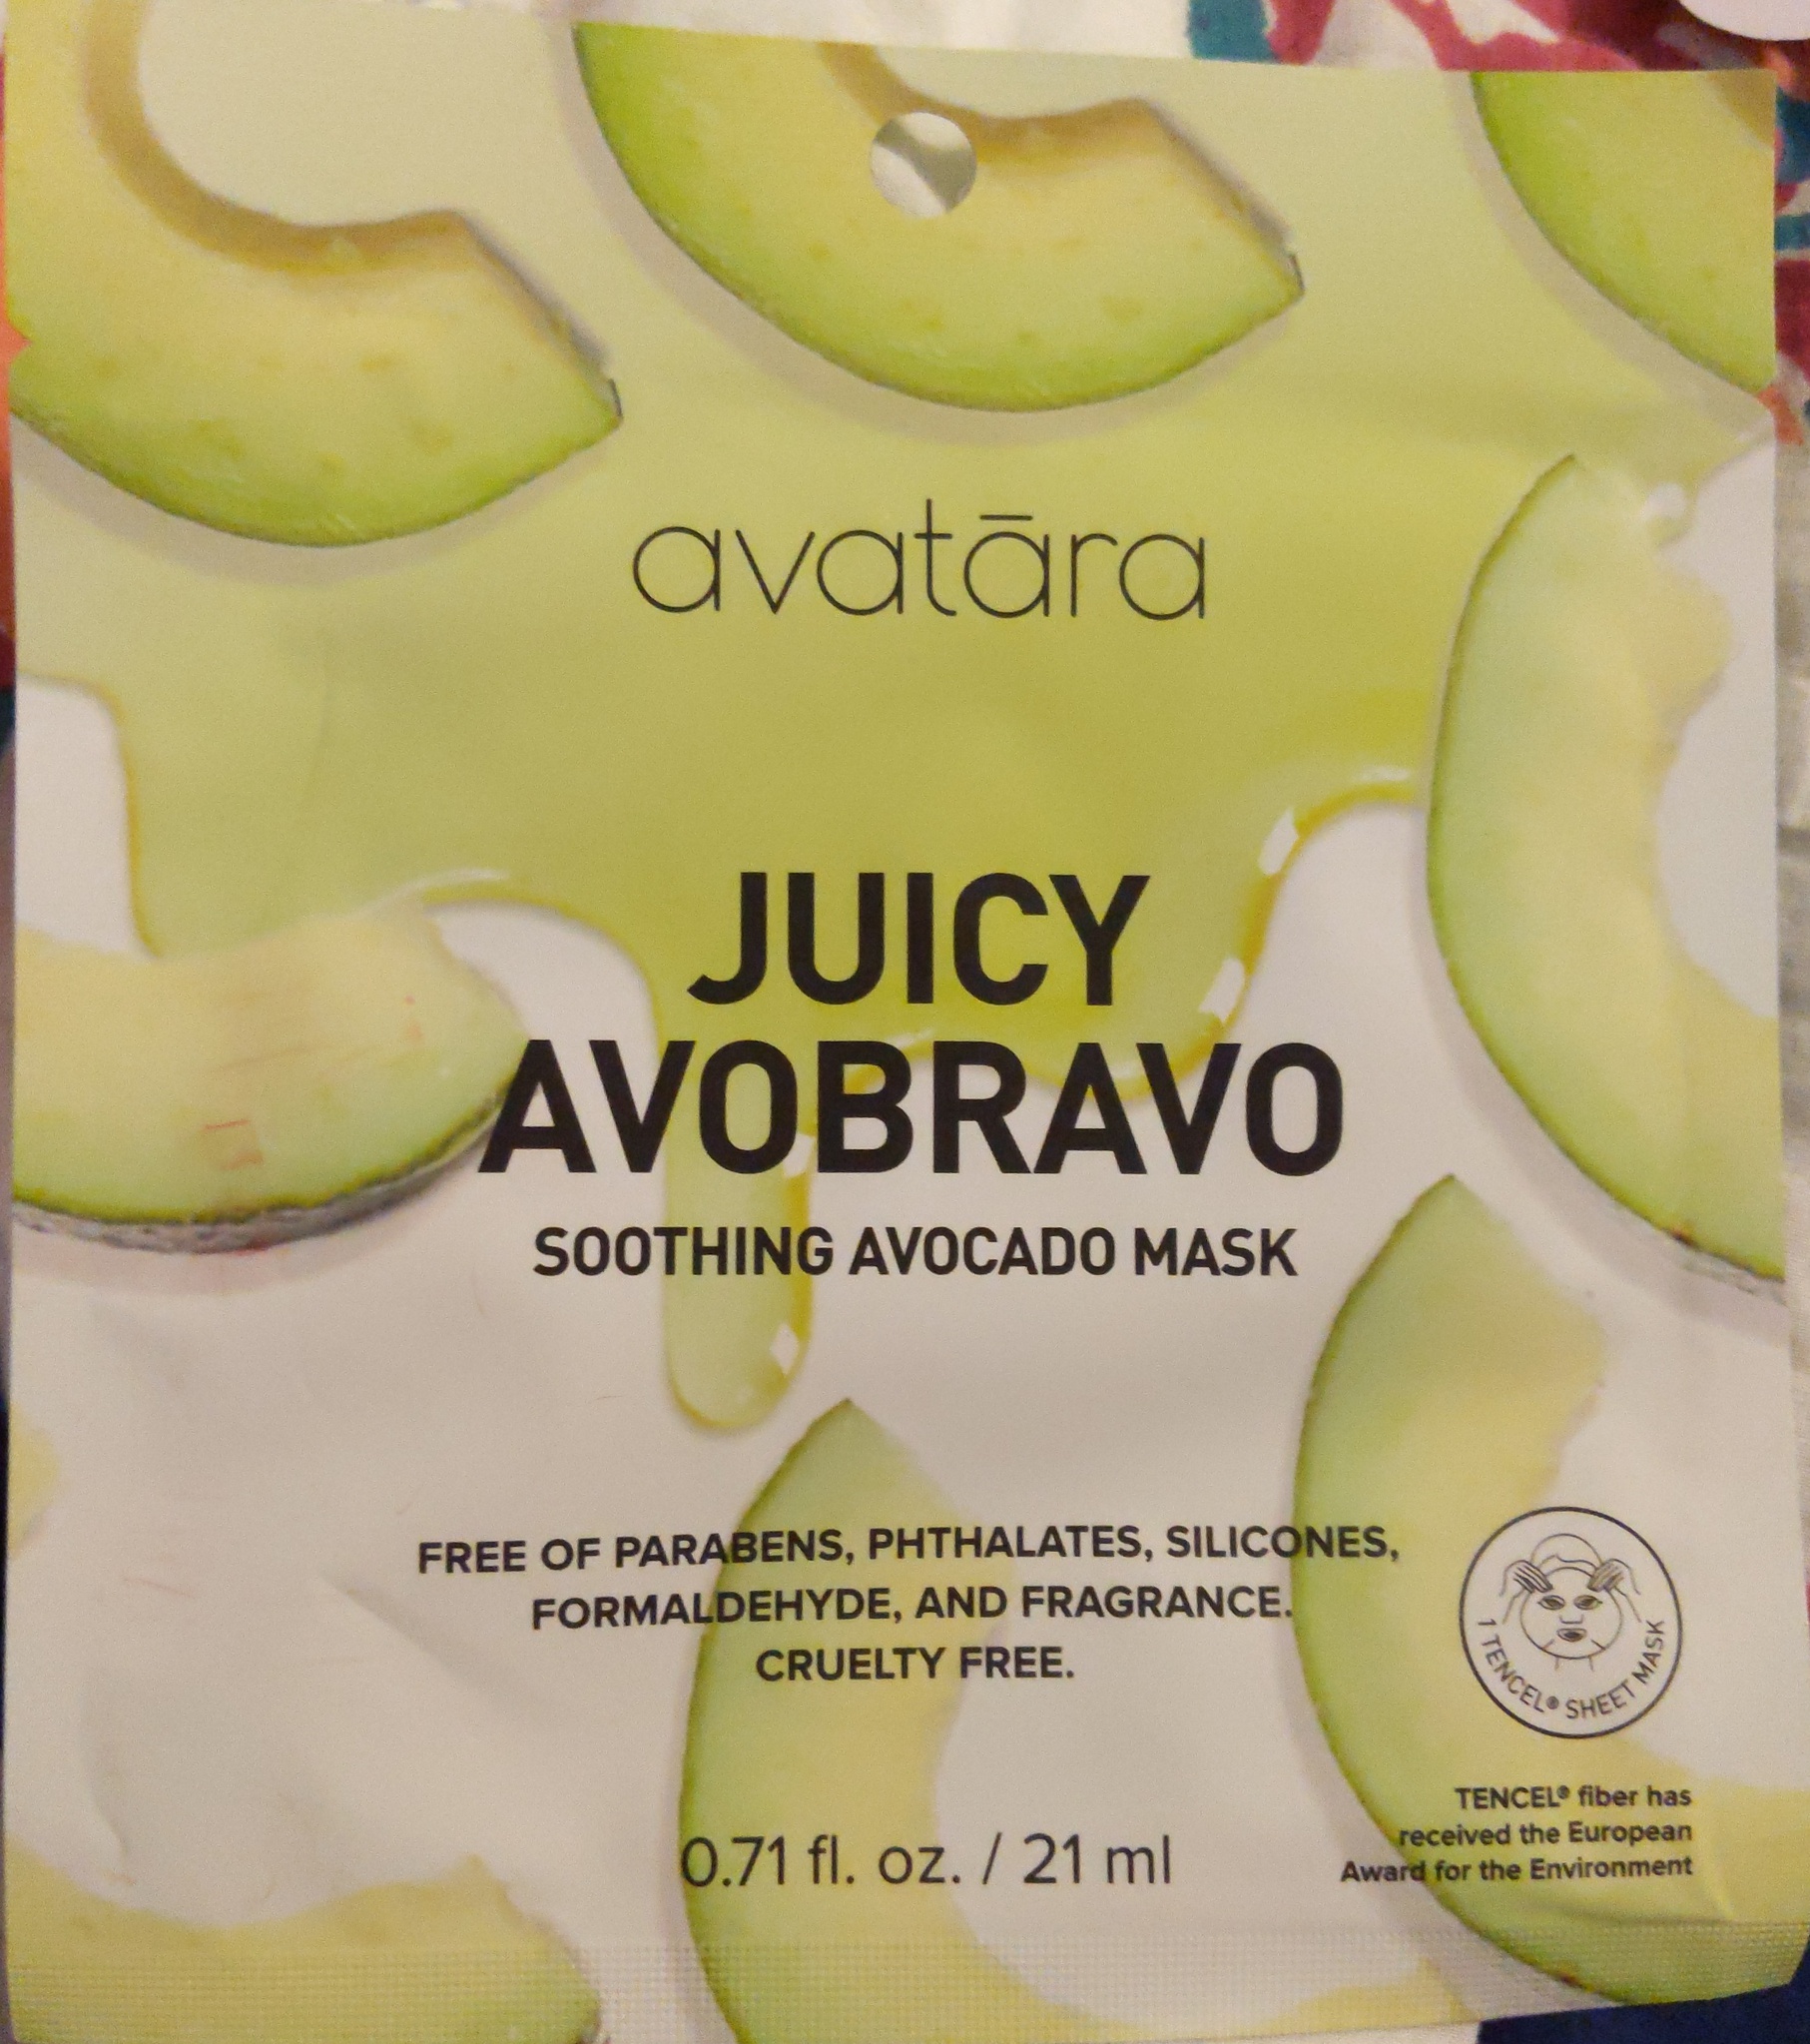 Avatara Juicy Avobravo